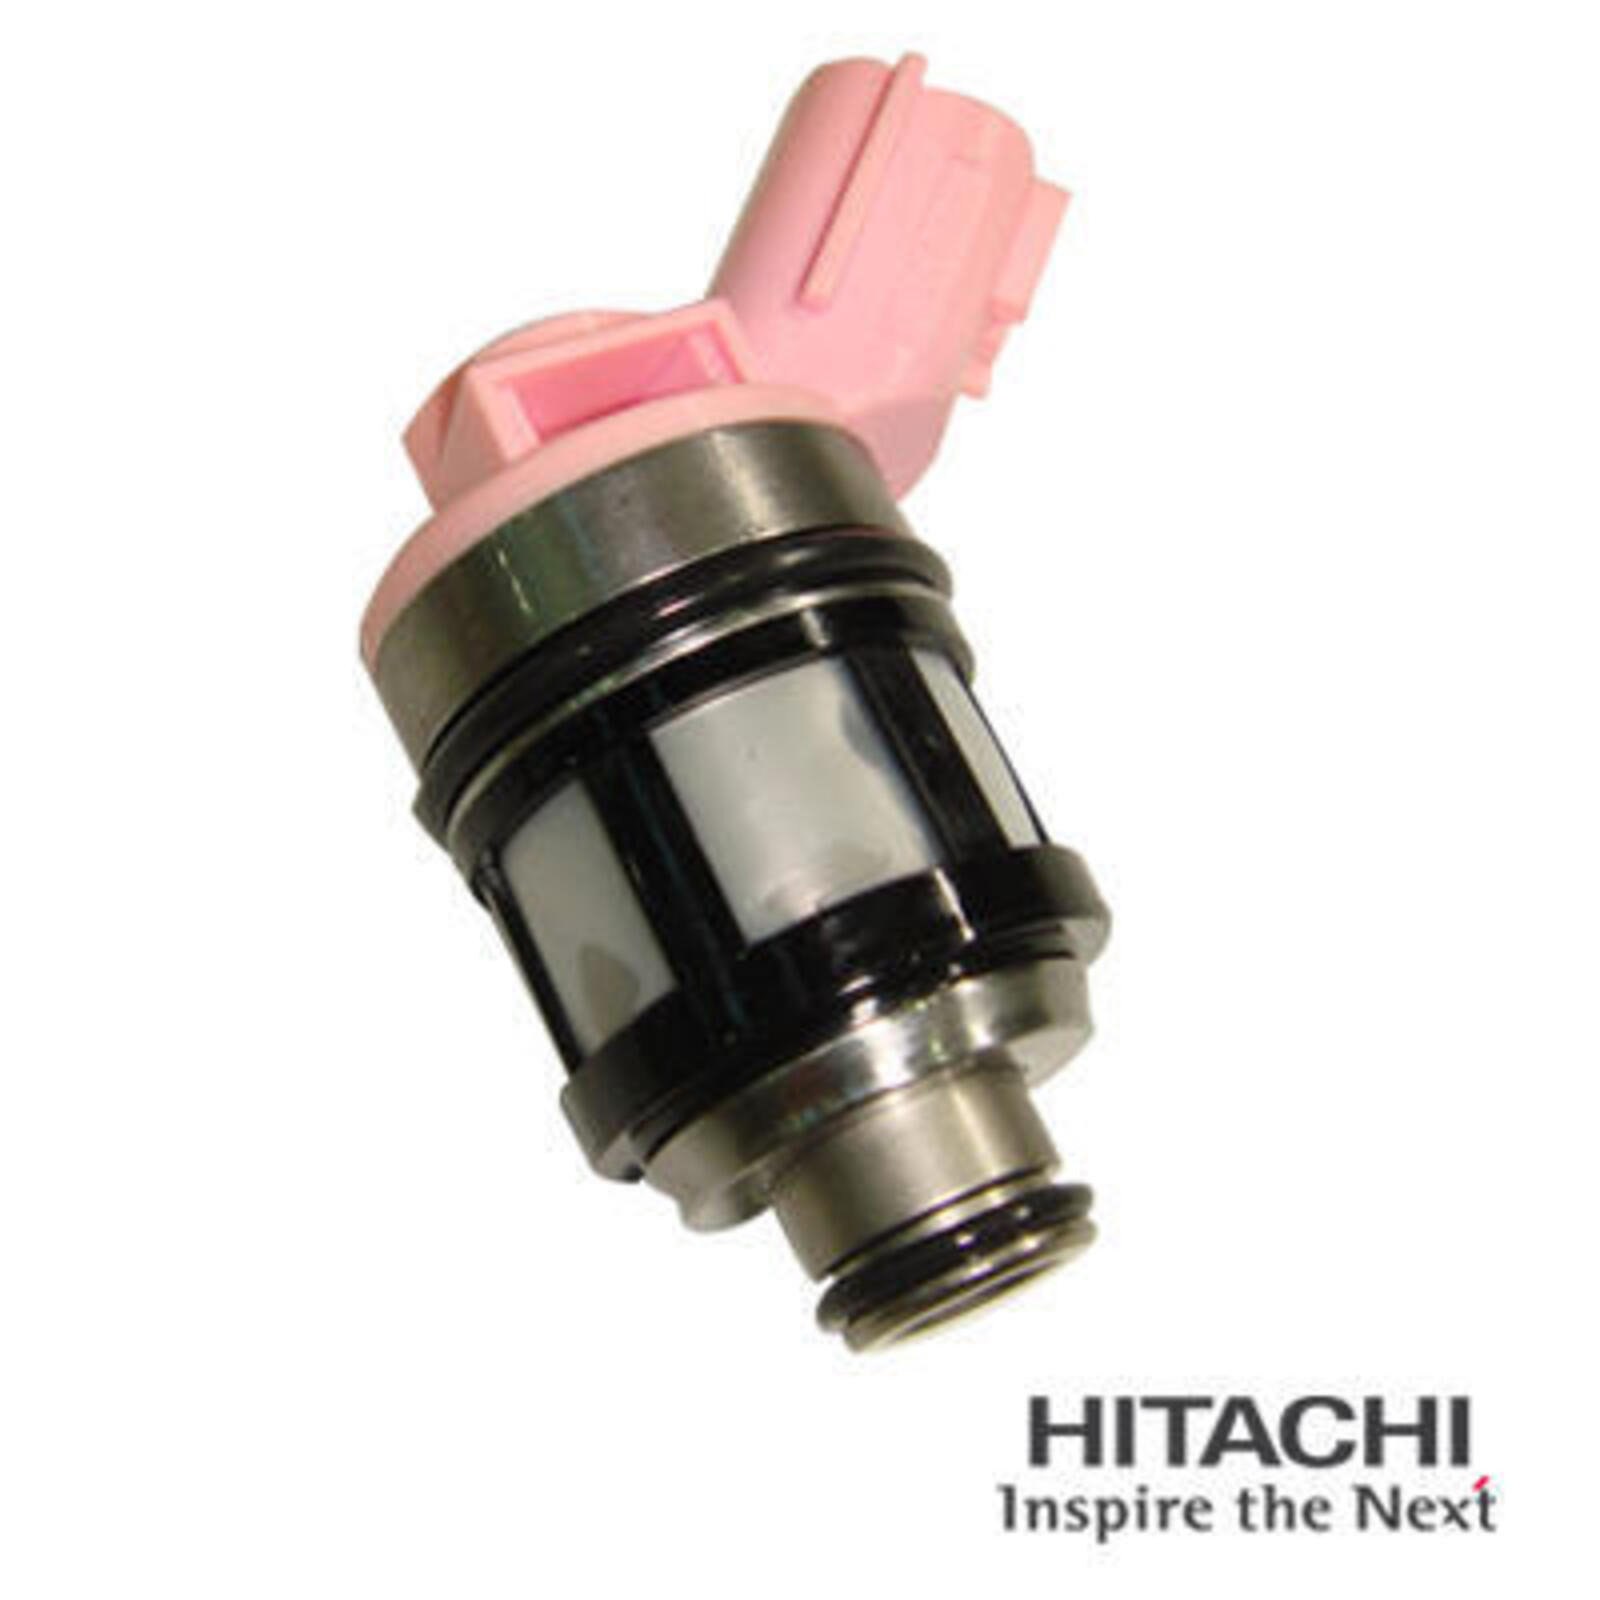 HITACHI Injector Original Spare Part